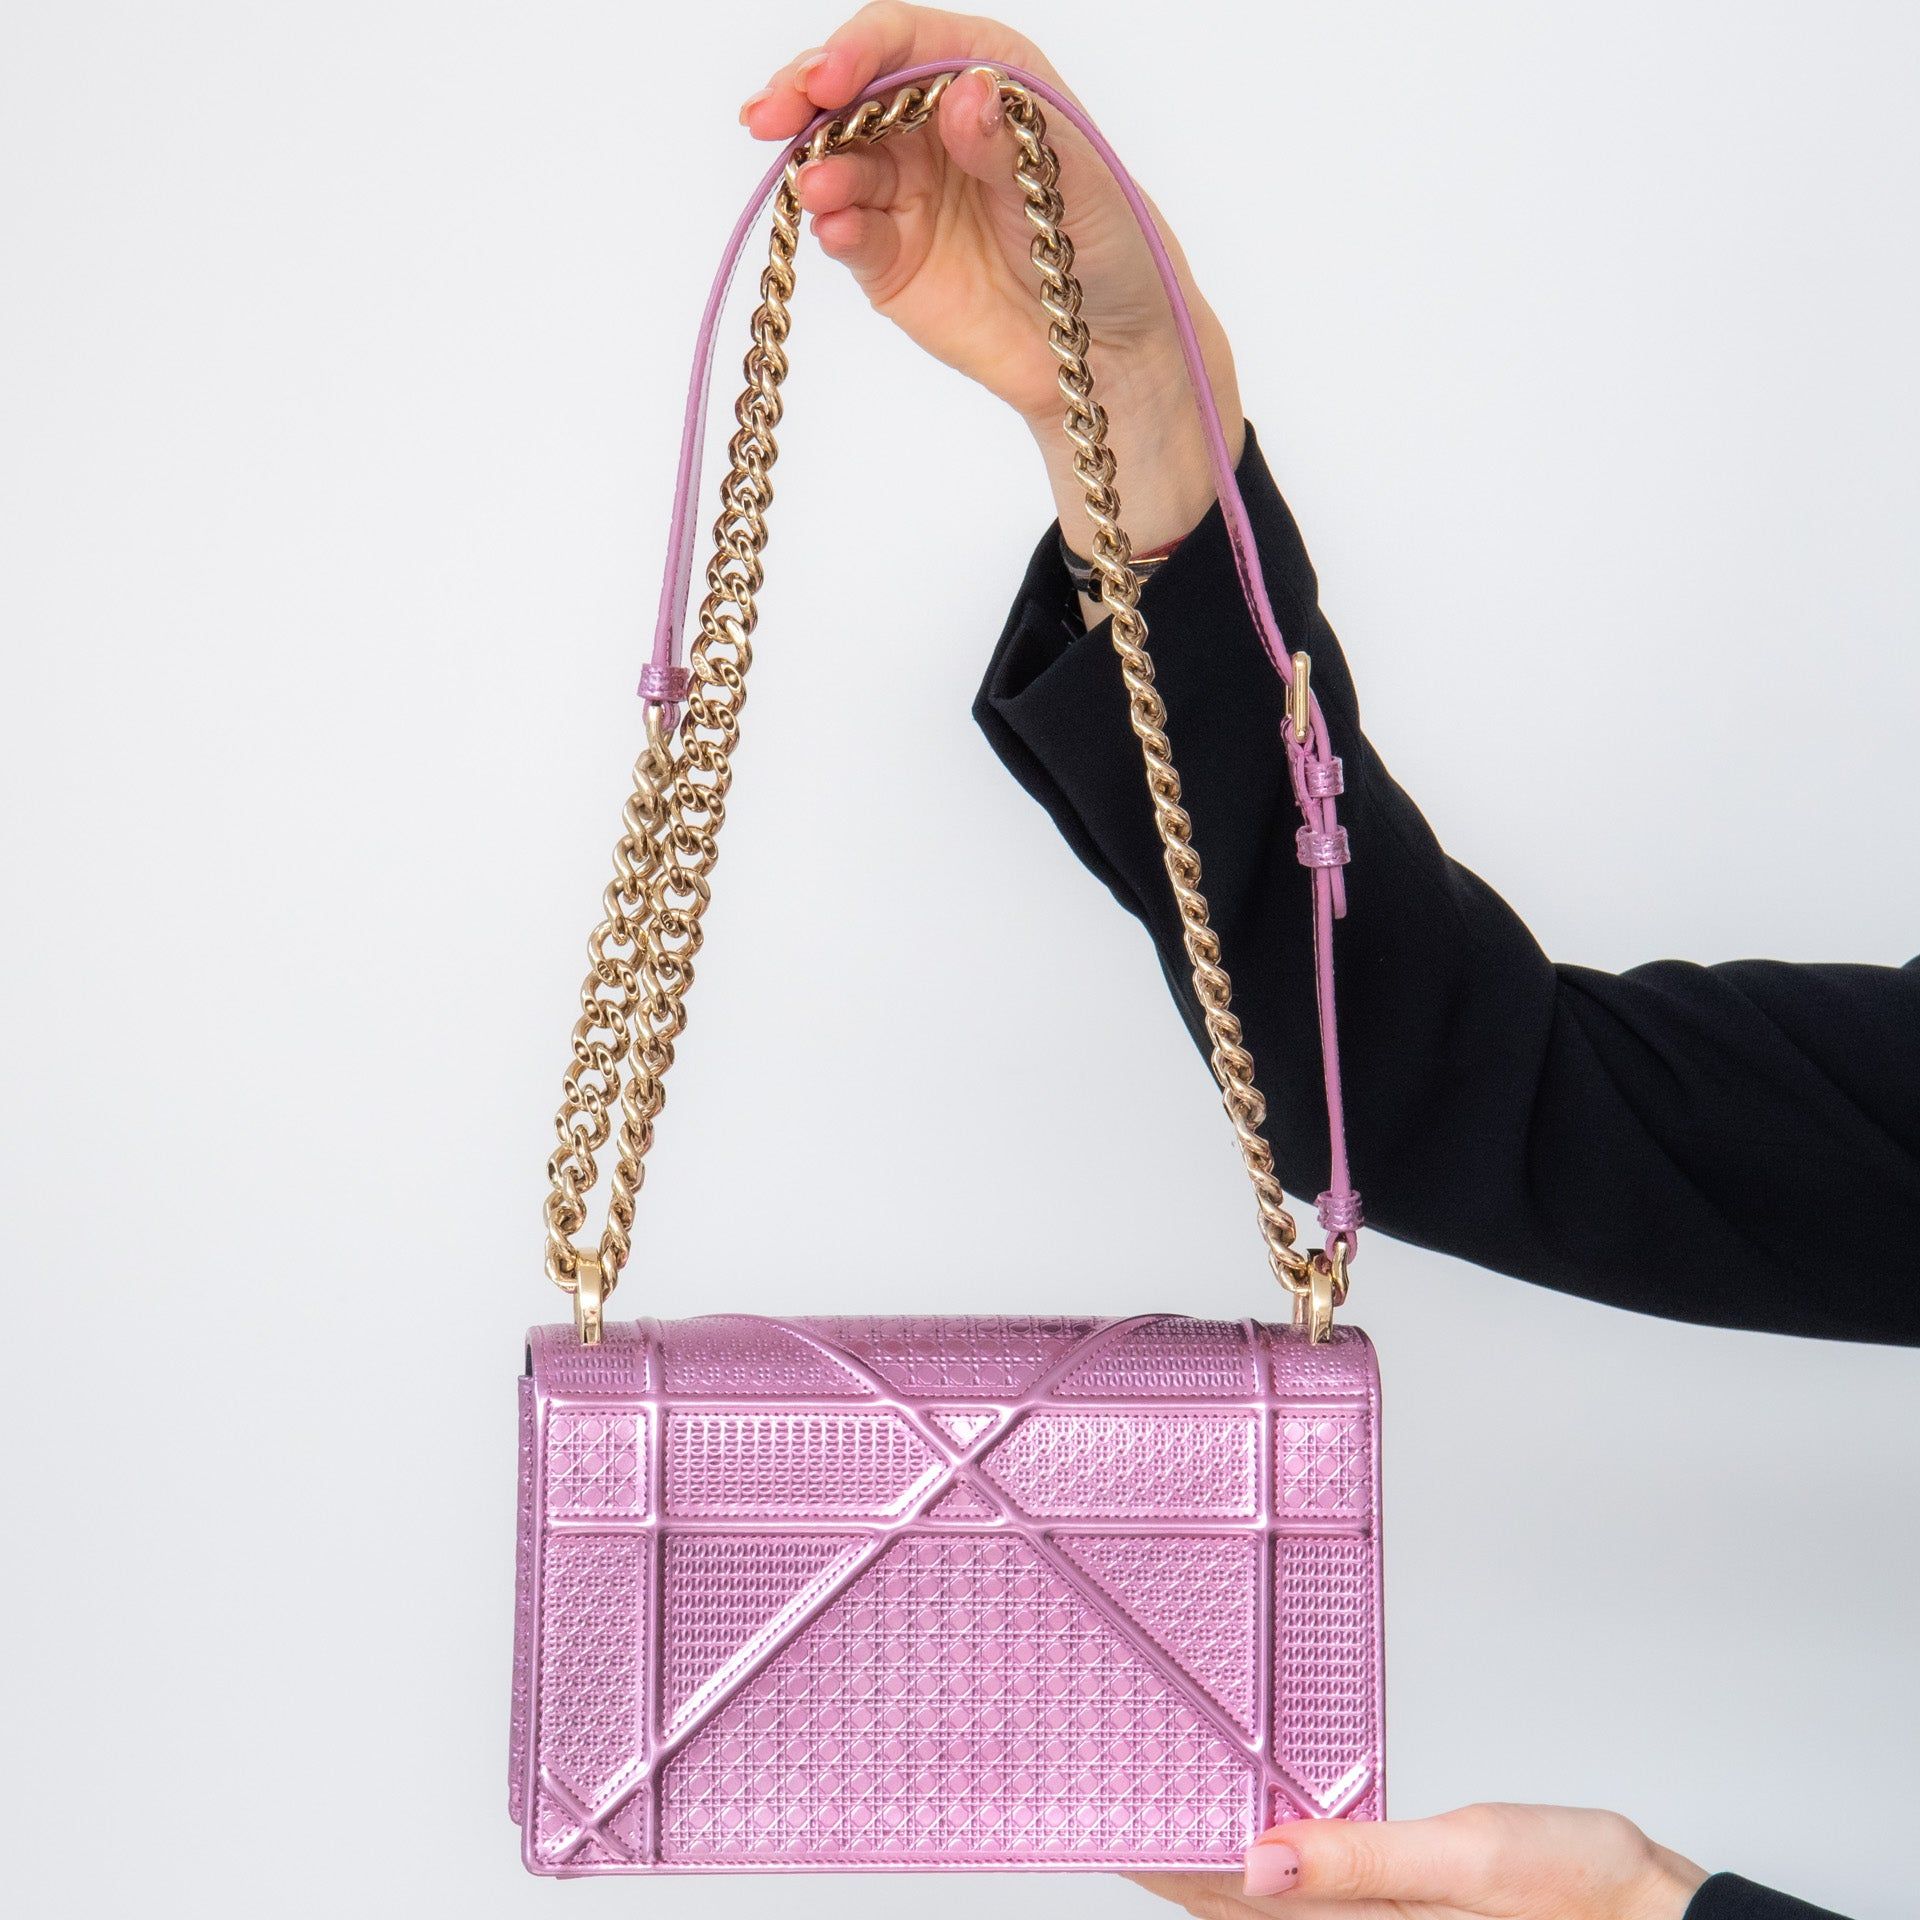 Dior Diorama Metallic Pink Bag - Image 6 of 8